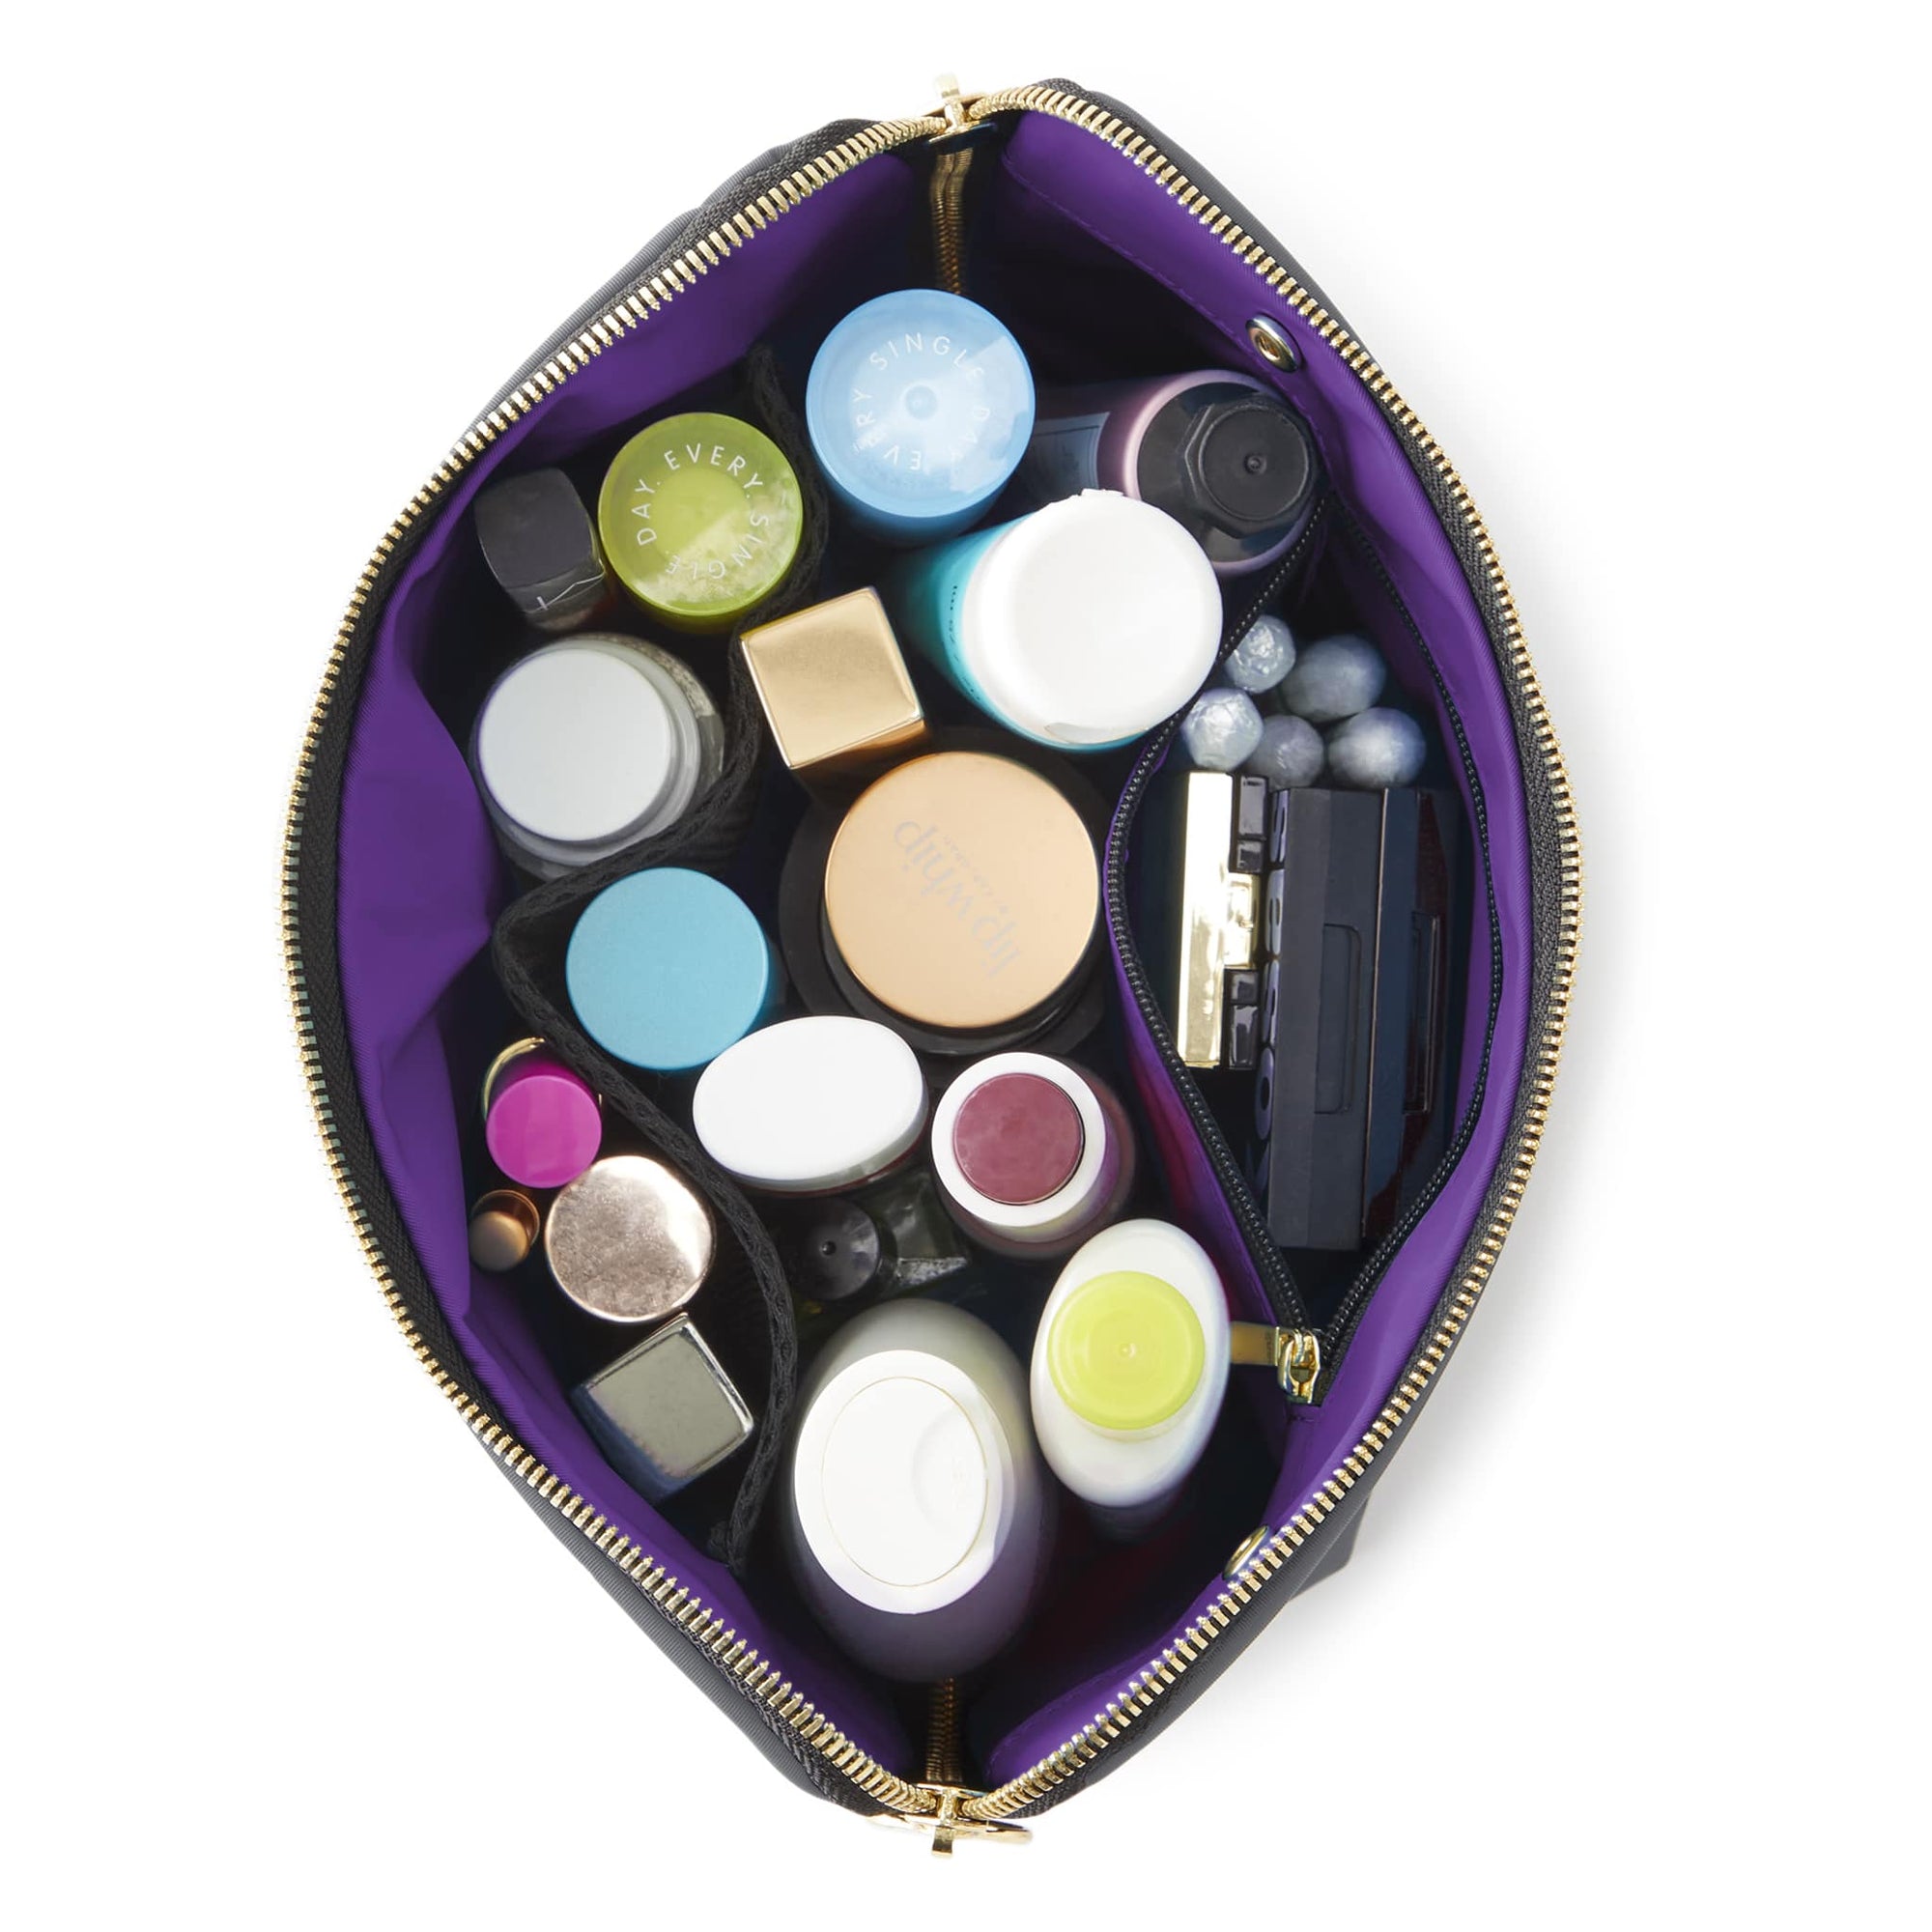 color: Steel Grey Fabric with Purple Interior; alt: Signature Medium Size Makeup Bag | KUSSHI